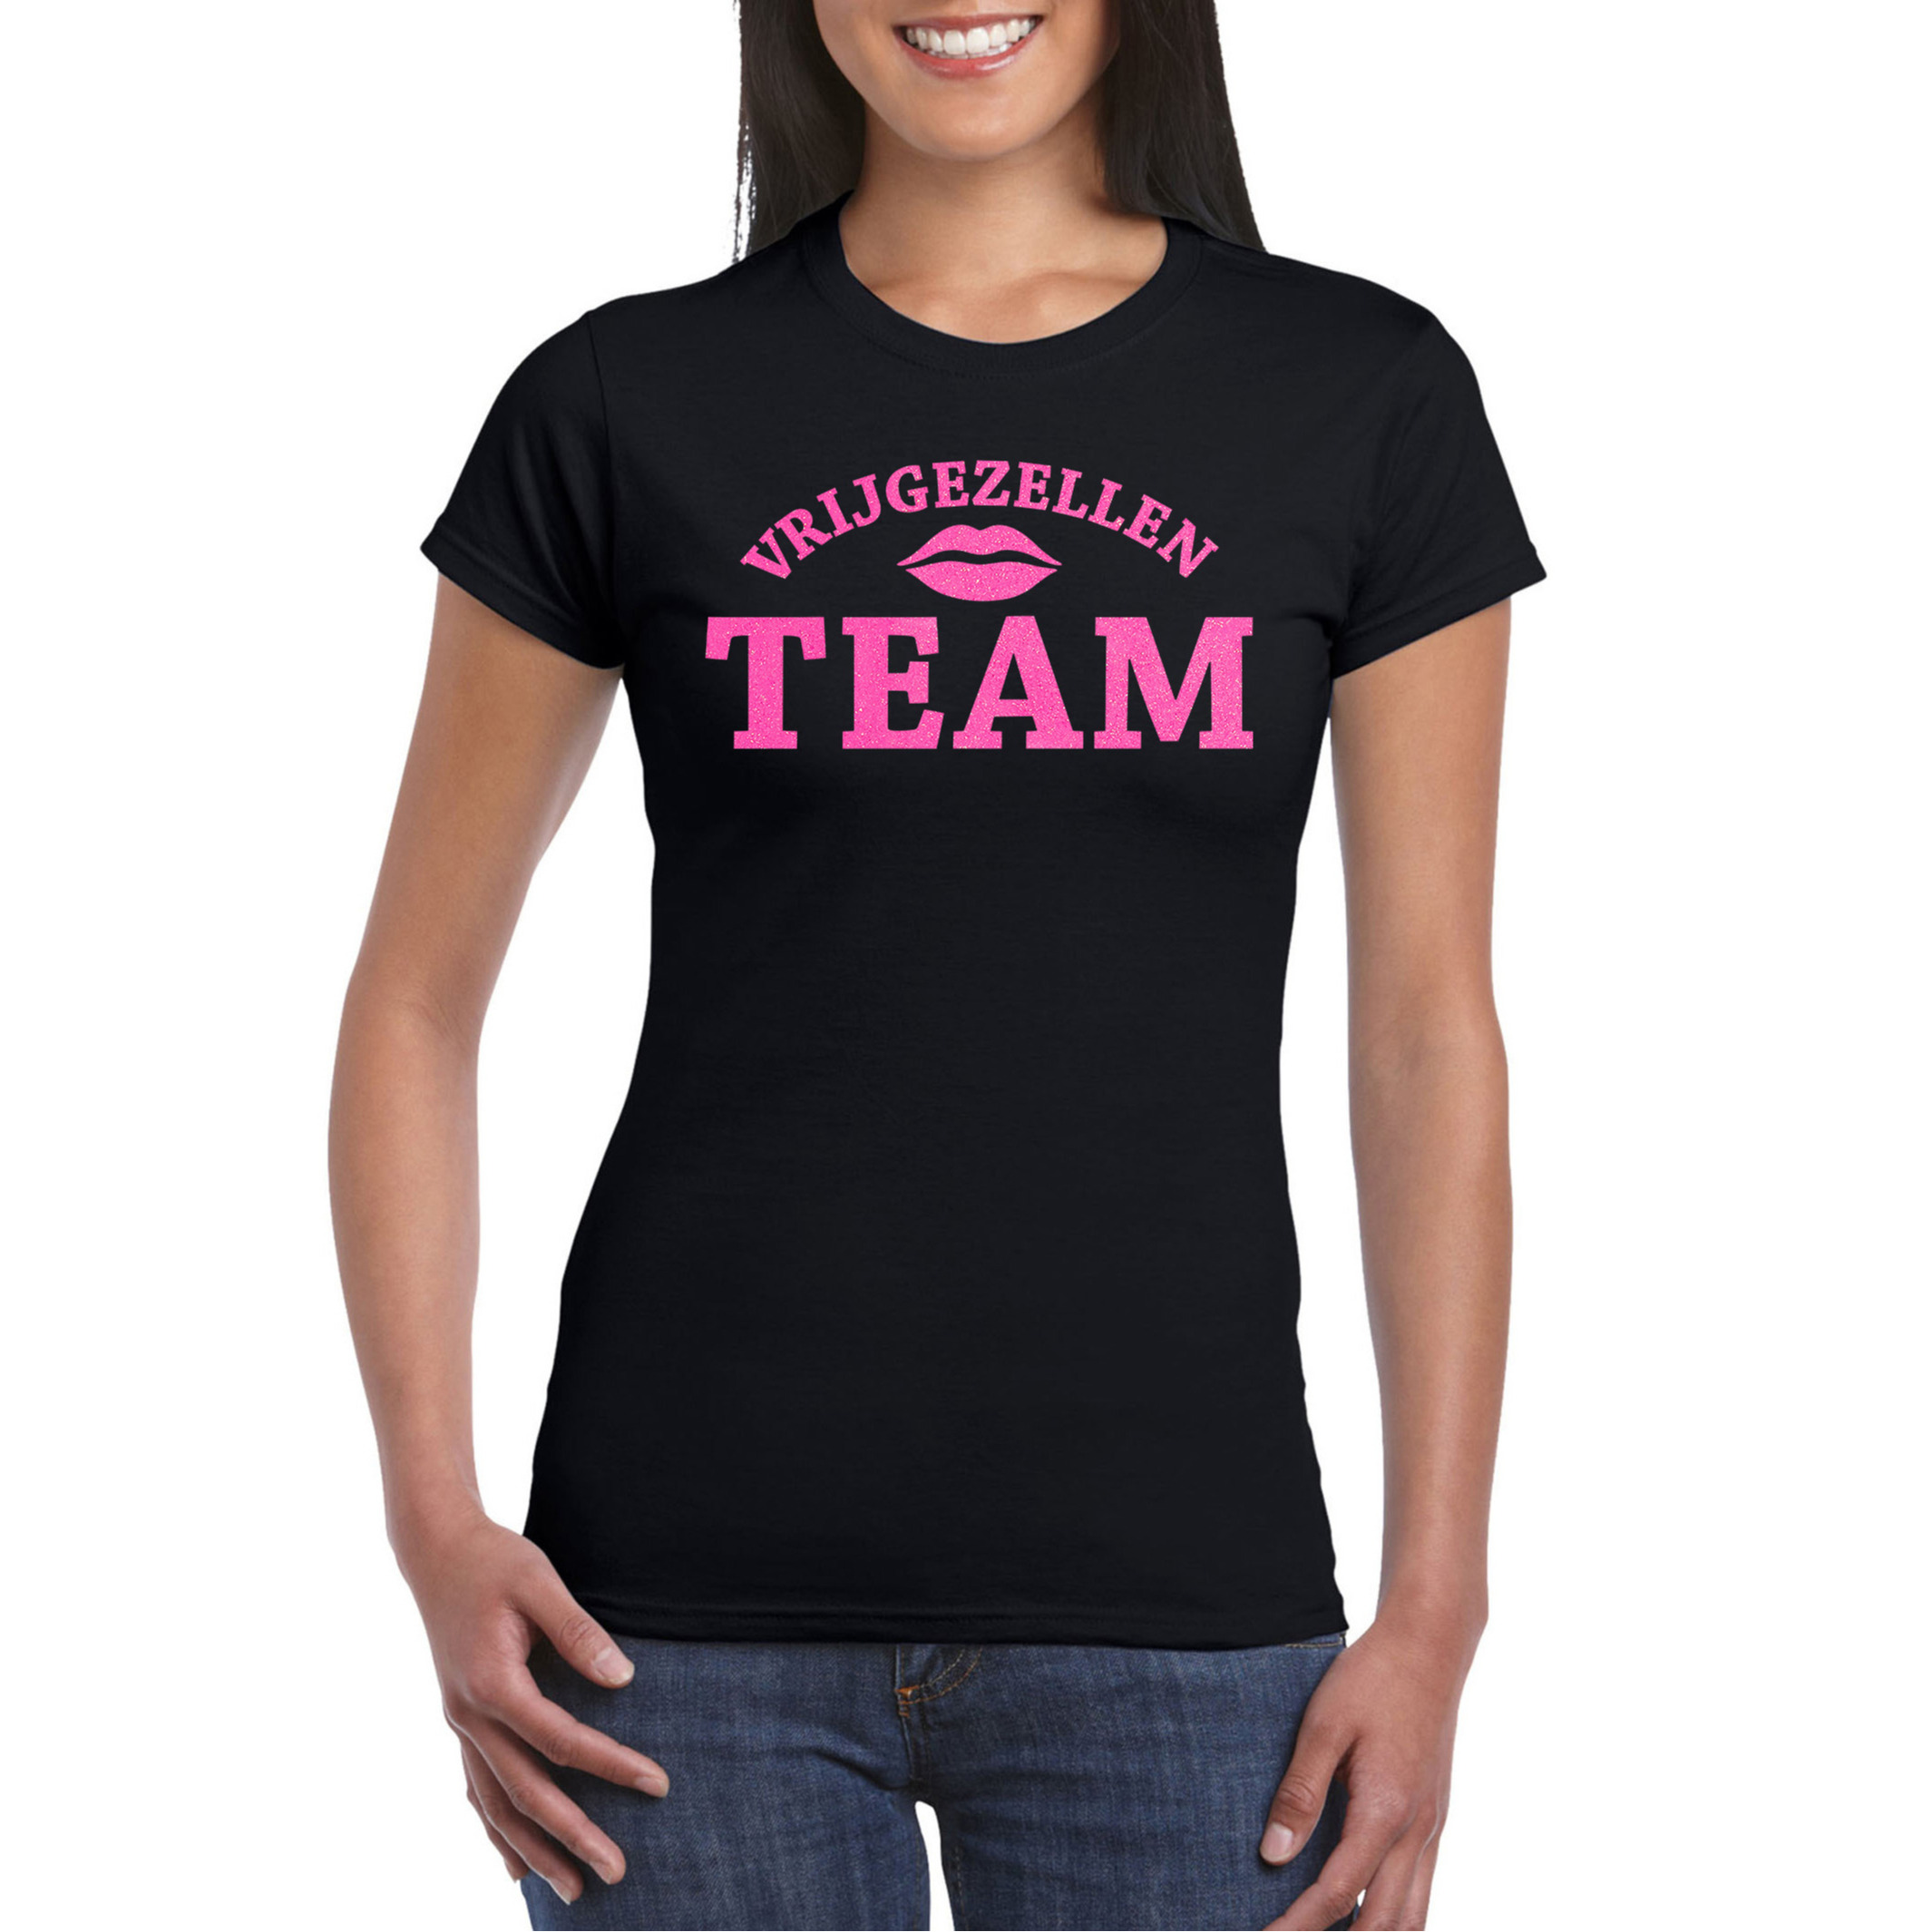 Vrijgezellenfeest T-shirt voor dames zwart roze glitter bruiloft-trouwen groep-team